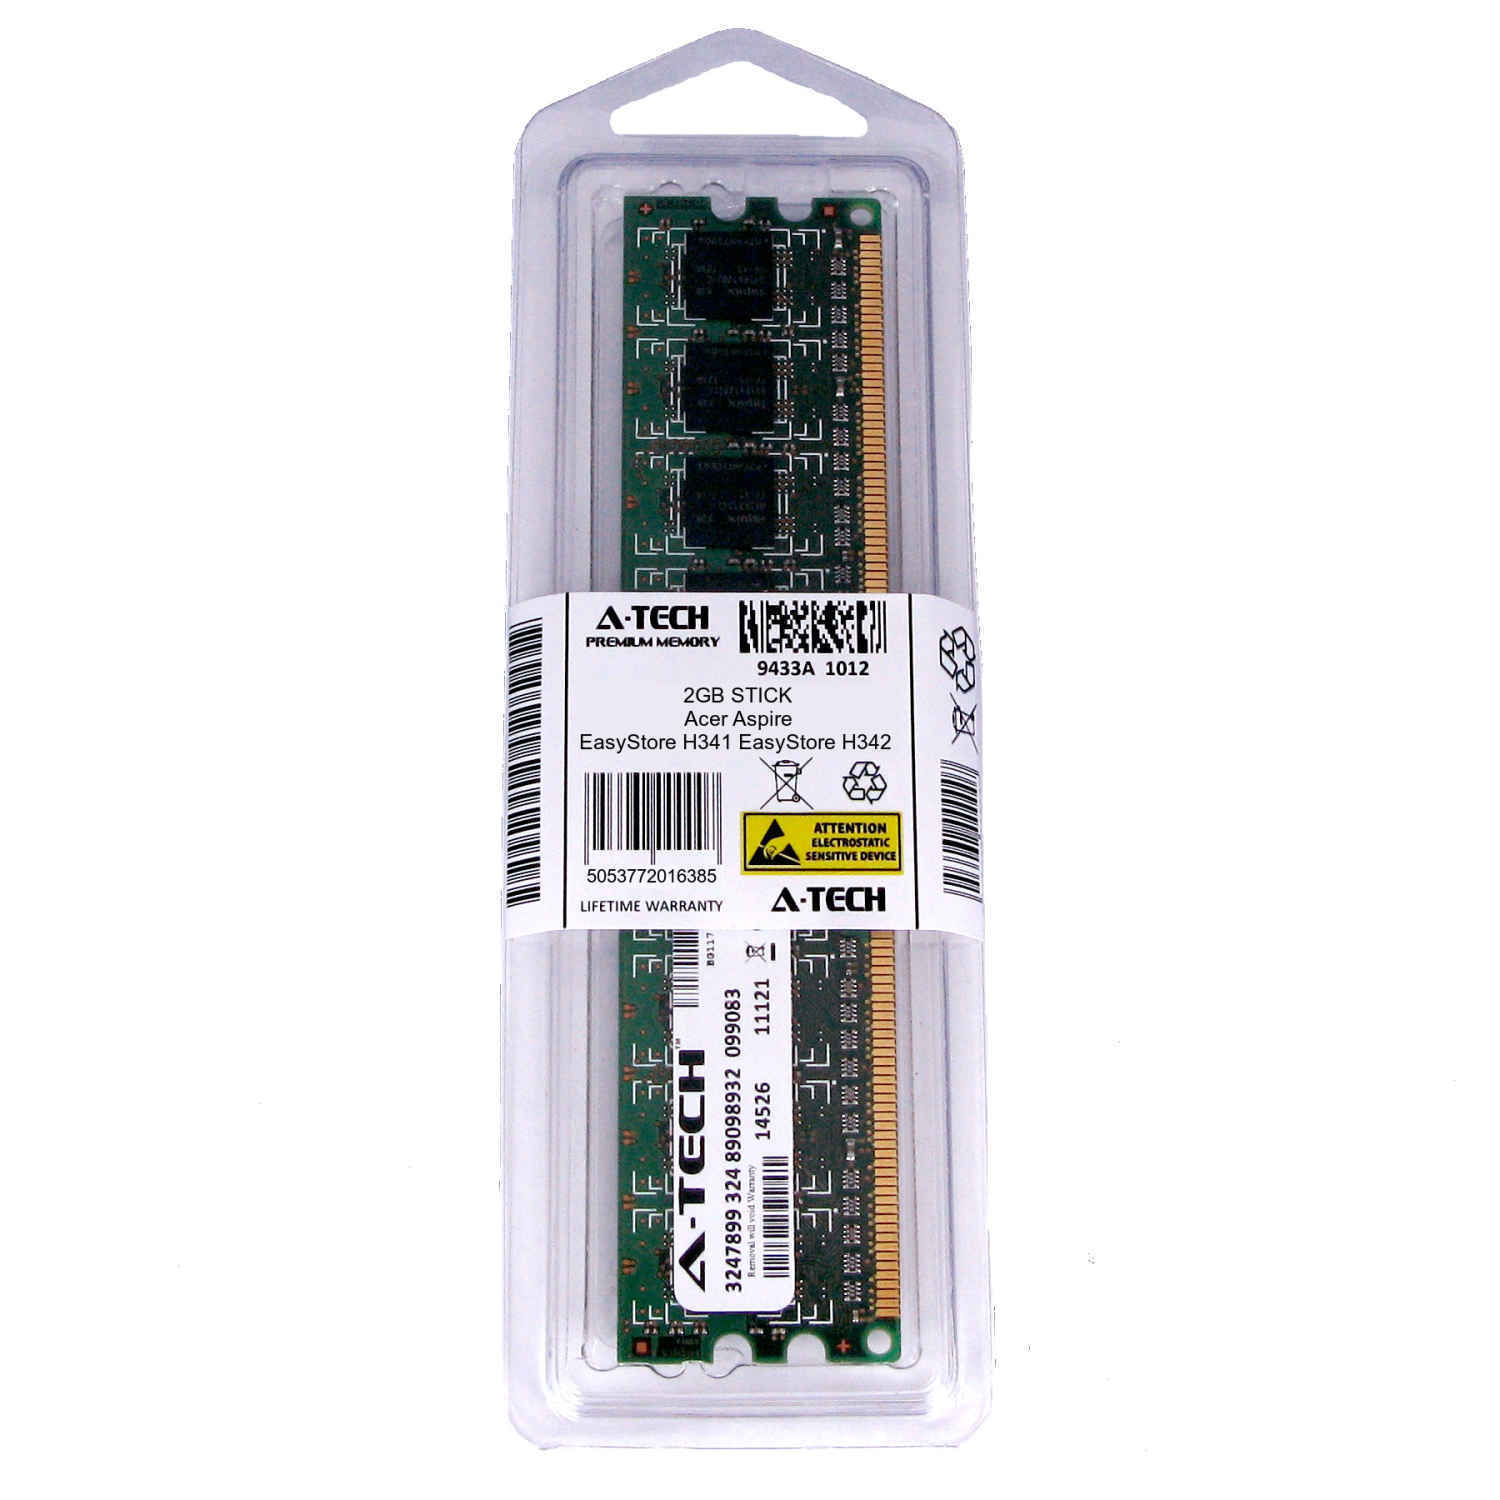 2GB DIMM Acer Aspire EasyStore H341 EasyStore H342 G1220 G1730 Ram Memory